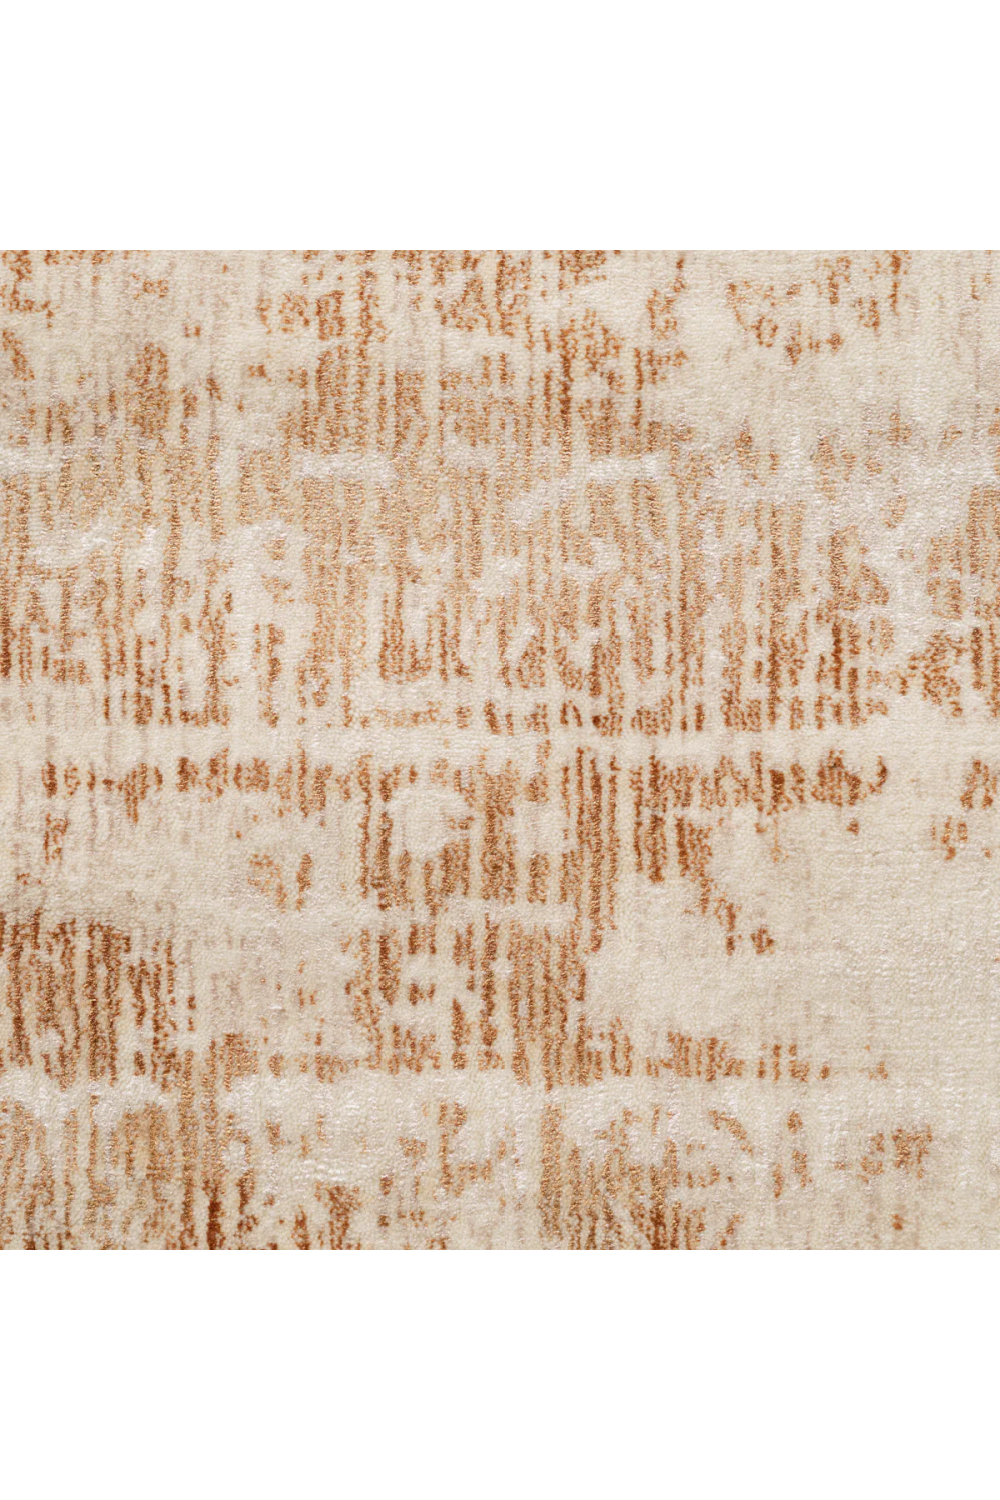 Beige Loom-Knotted Carpet | Eichholtz Noli | Oroa.com